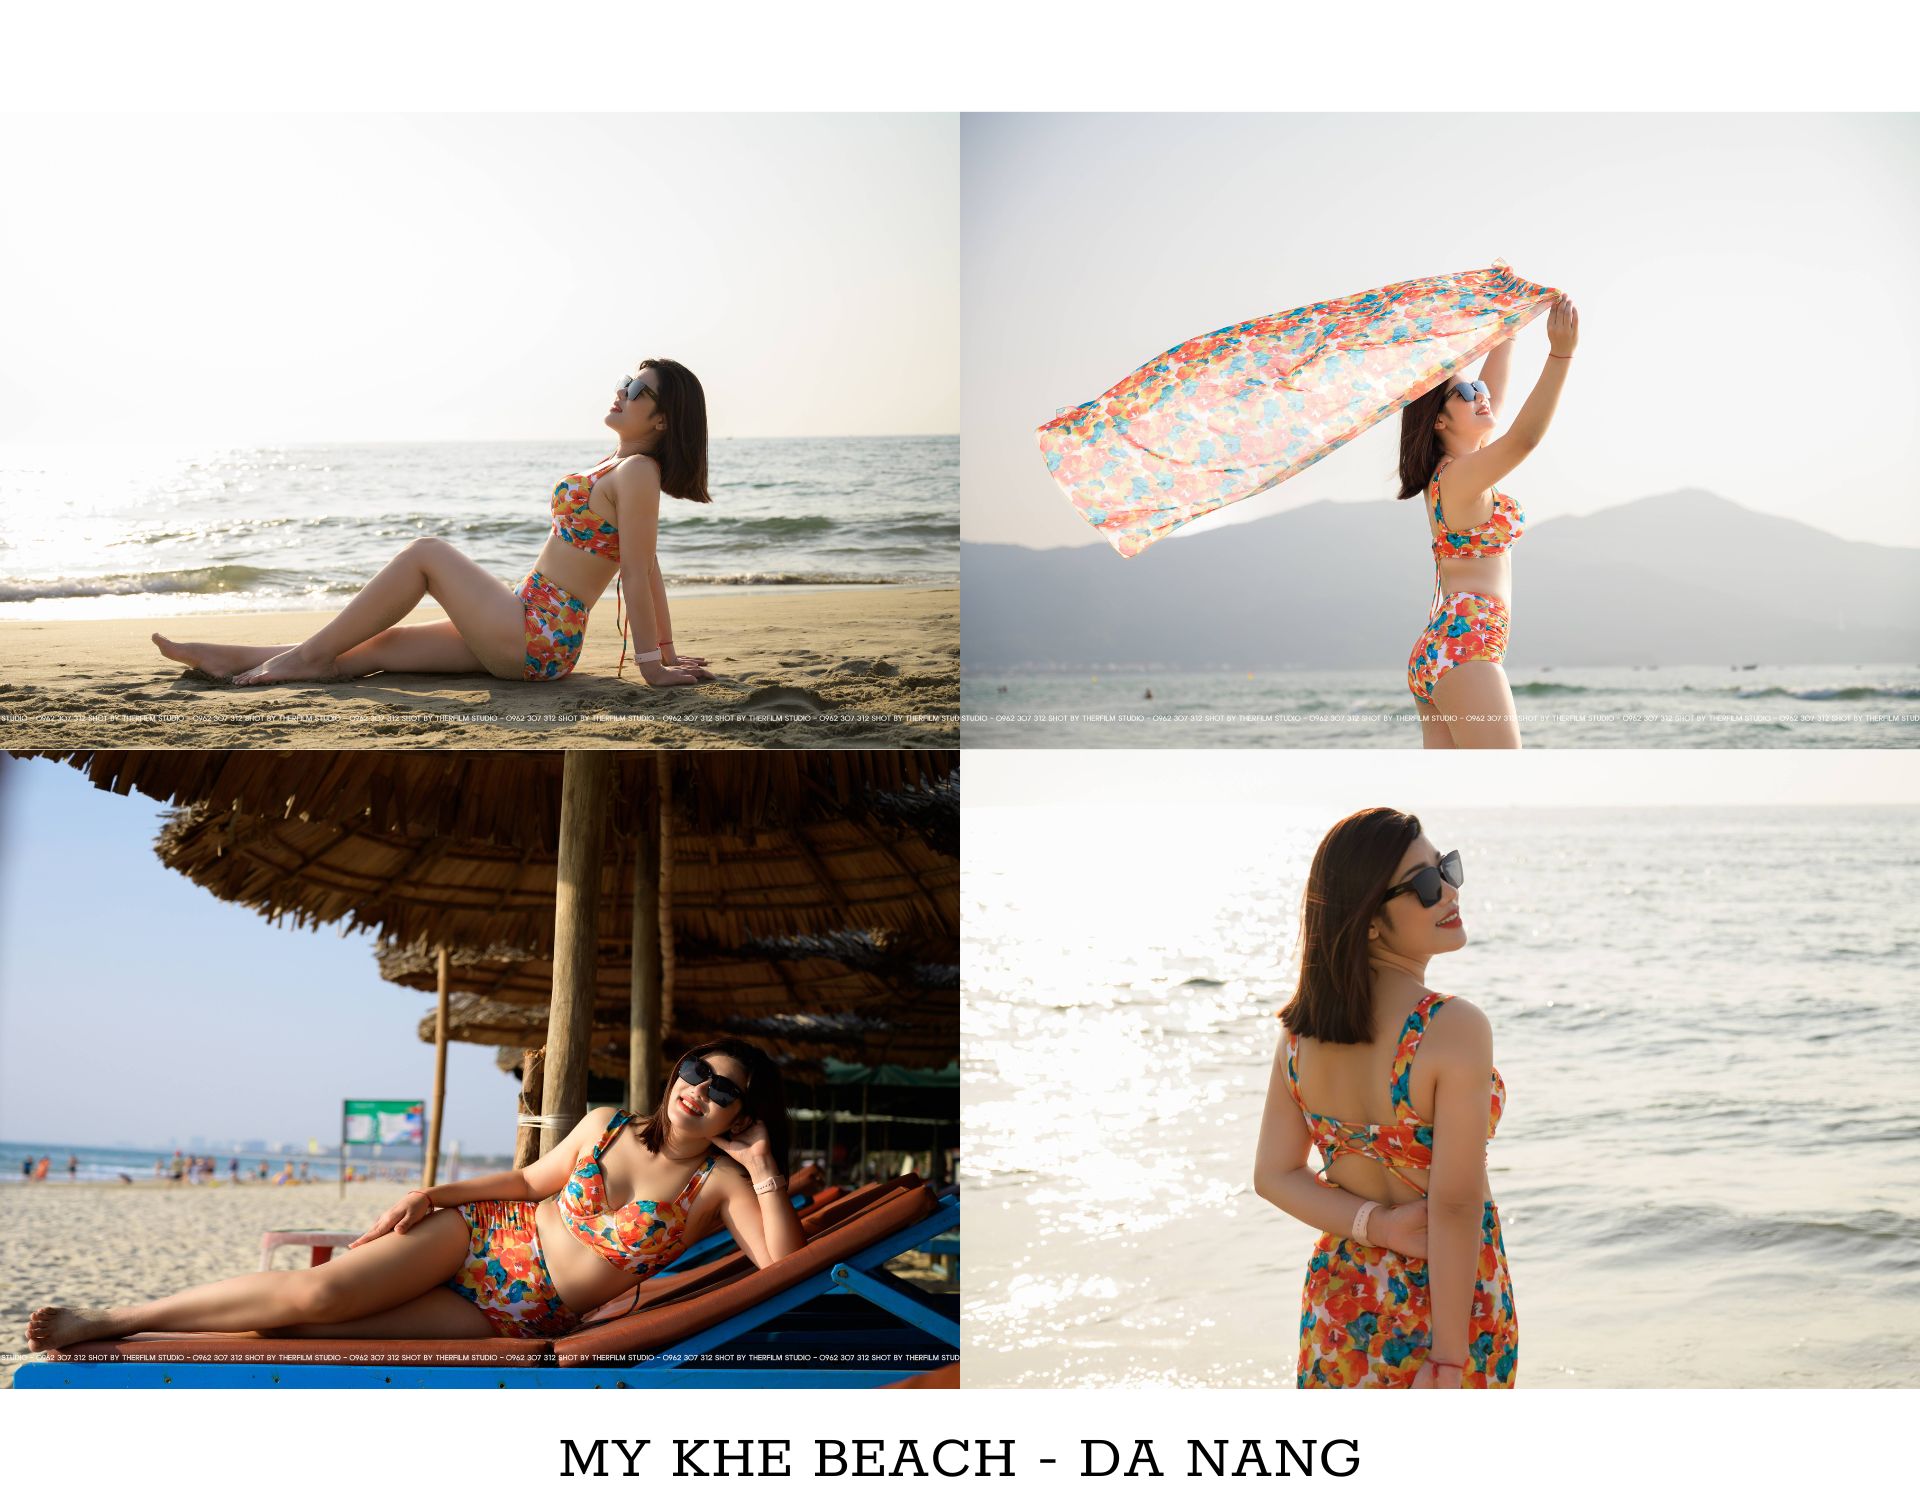 Da Nang photographer - Professional Photography Services